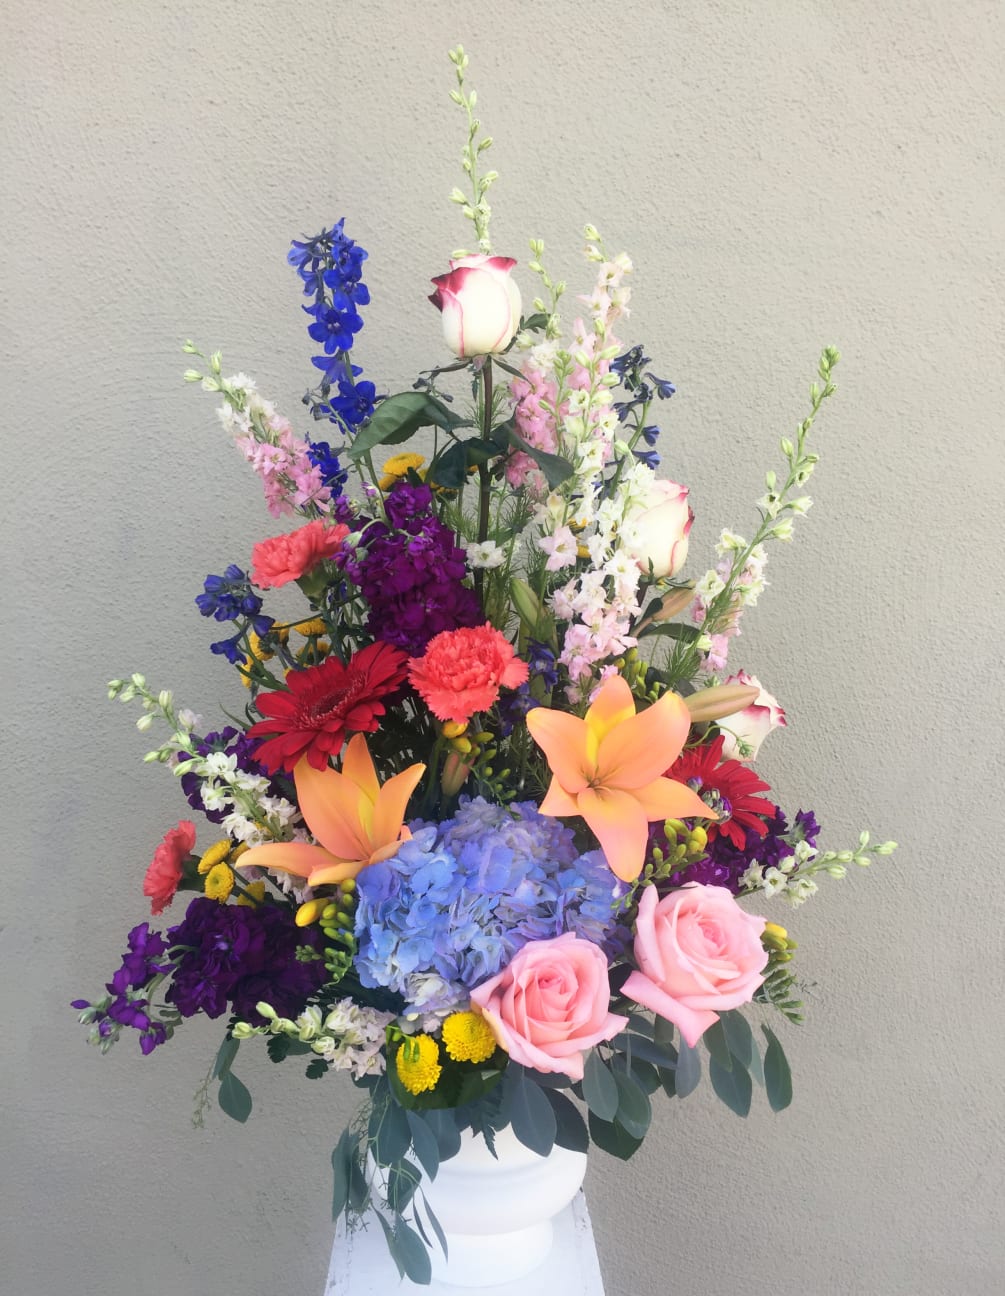 A basket arrangement with gerber daisies, larkspur, beladonna, larkspur, buttonpoms, roses, carnations